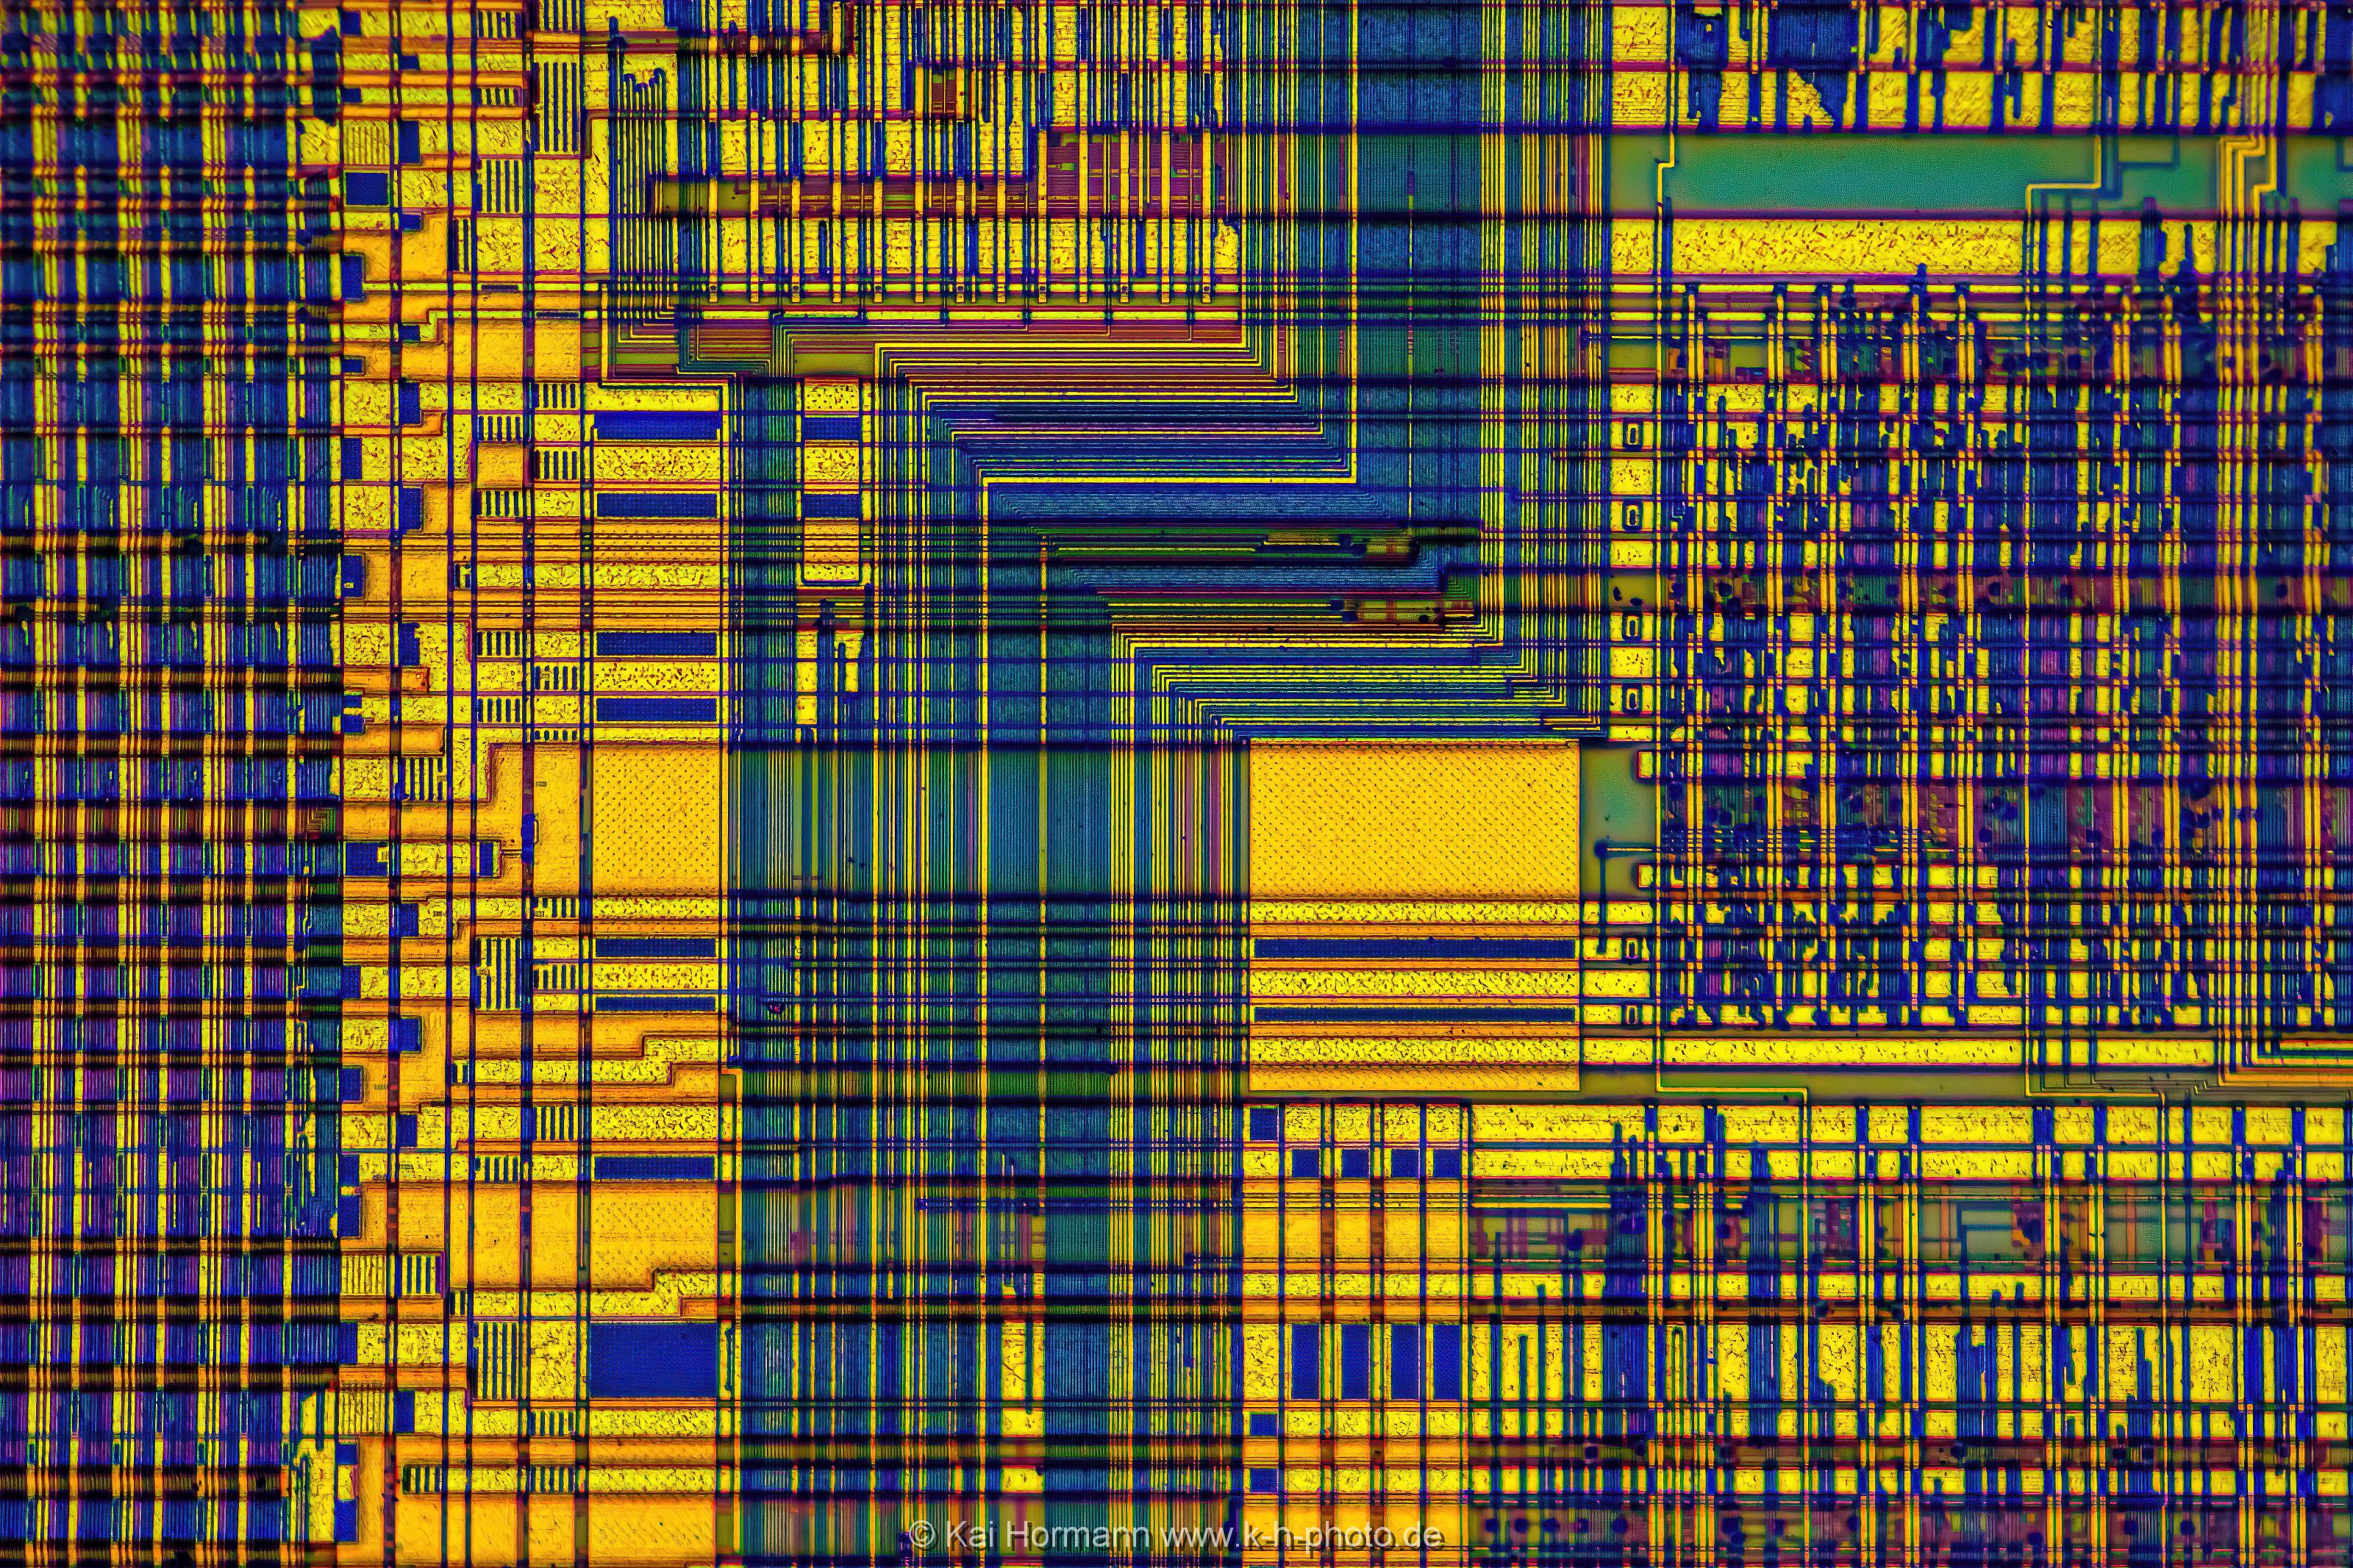 Pentium 1 CPU Silizium Oberfläche. (Kreuzpolarisation) Silizium-Strukturen historischer CPU Kerne unter dem Polarisationsmikroskop.